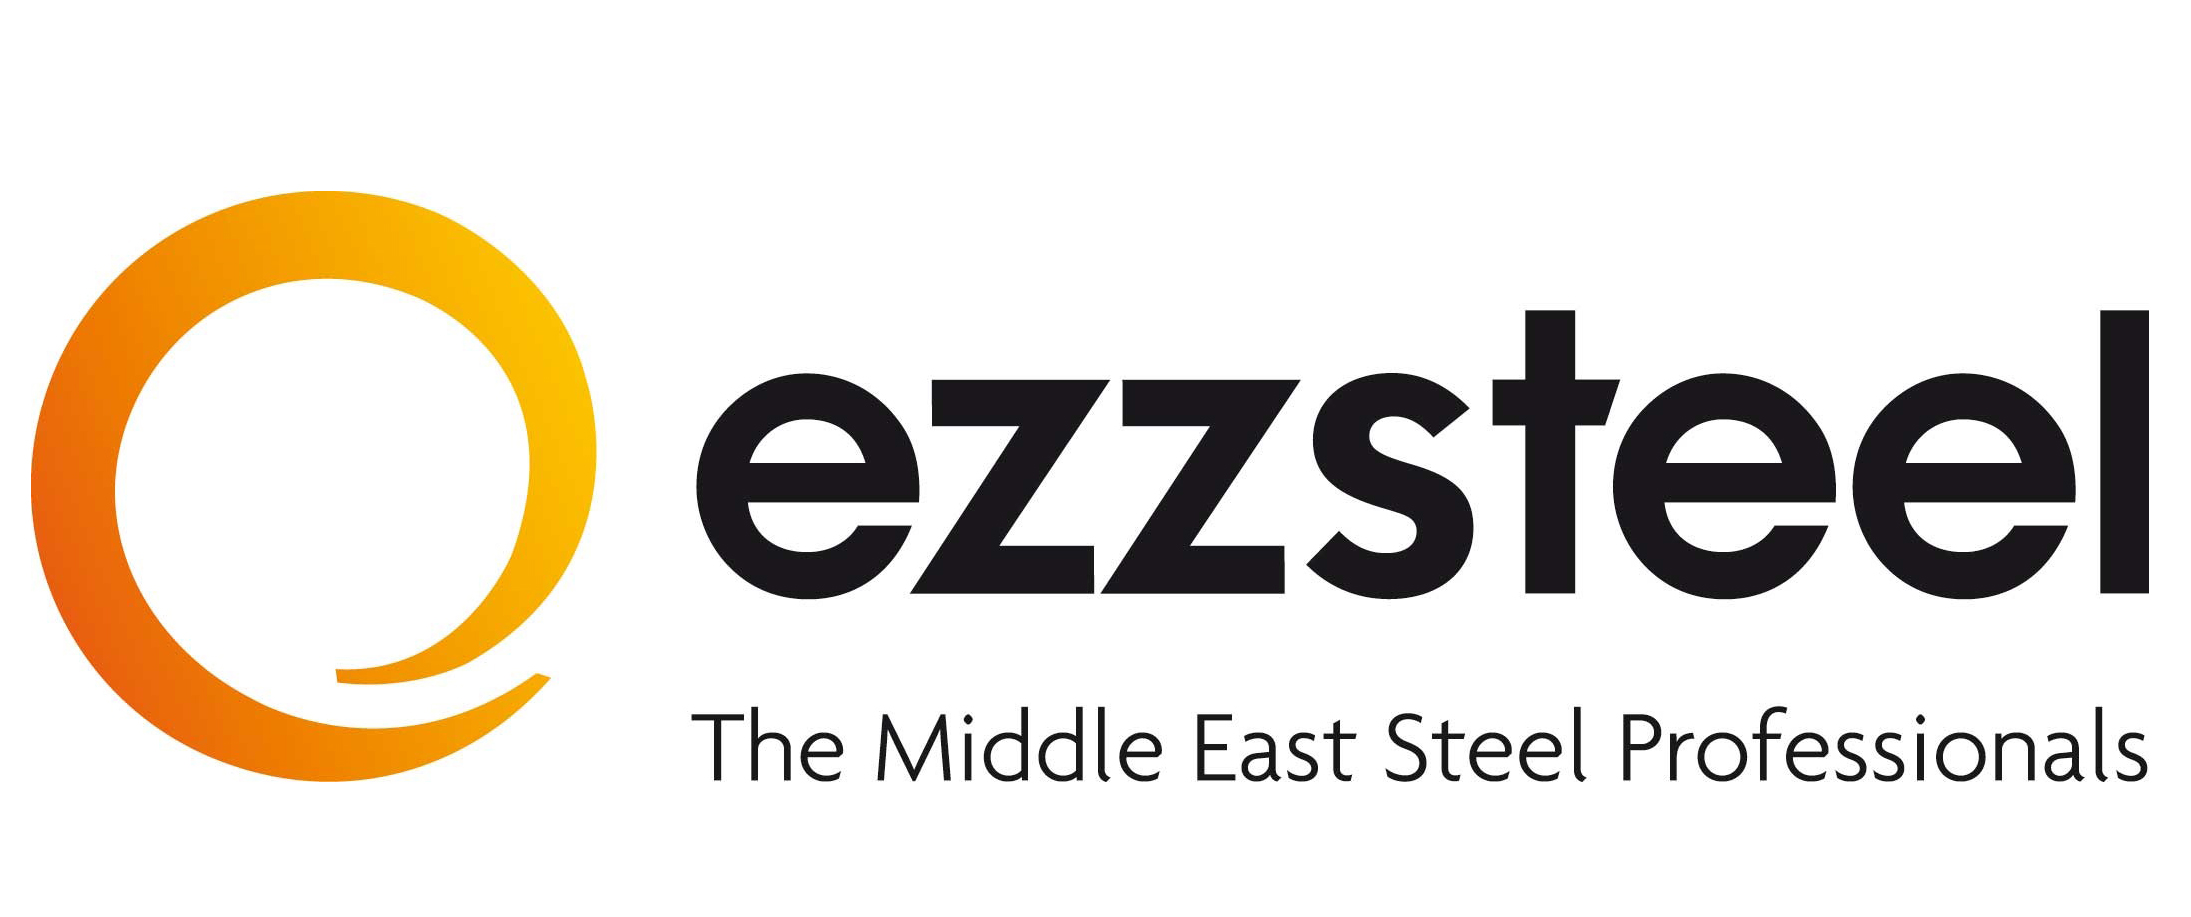 Ezz Steel